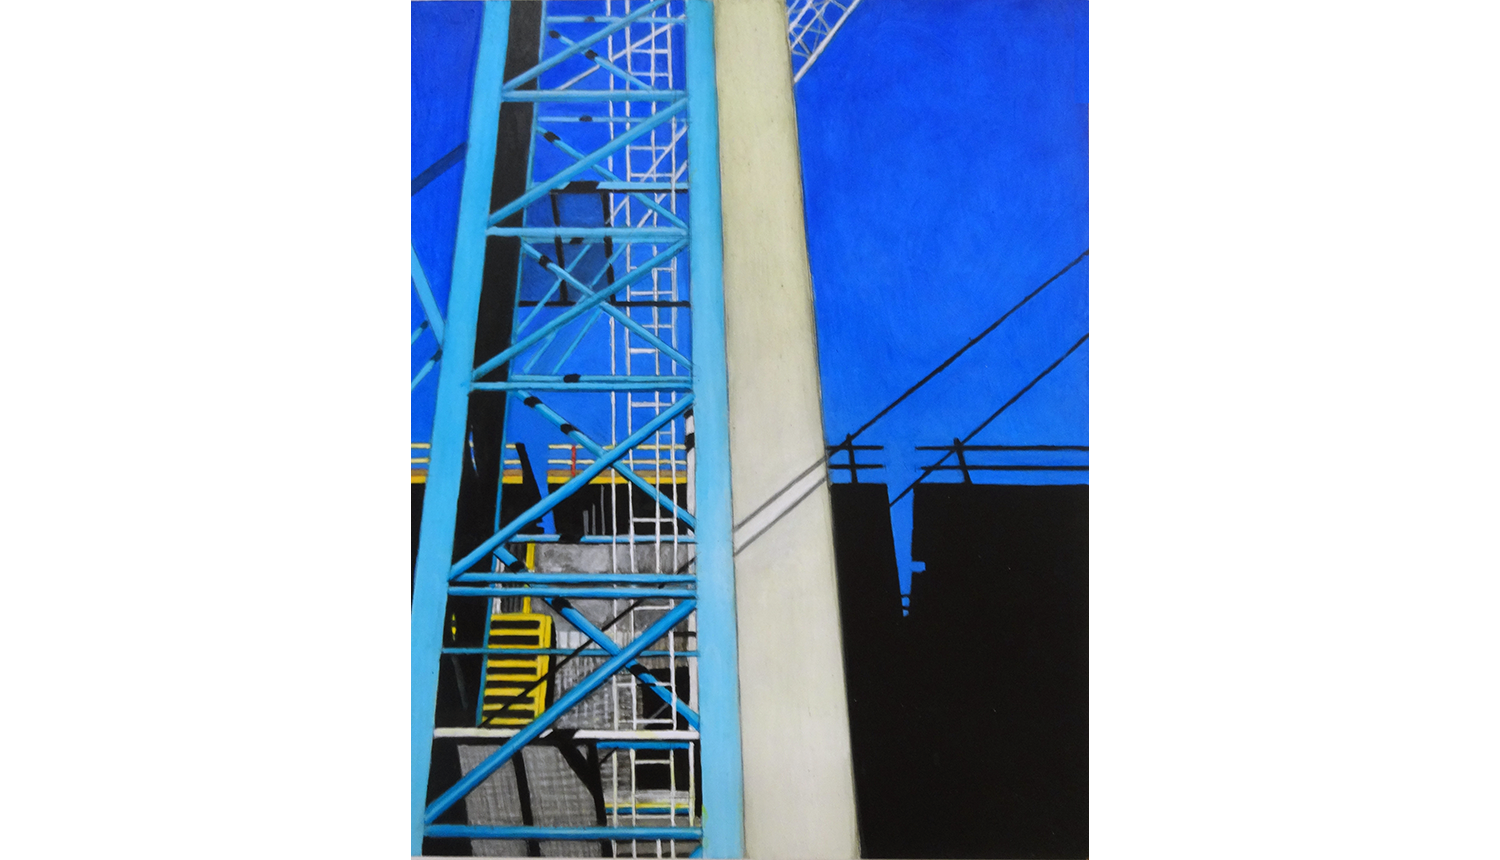   Hudson Yards 3, 2014, Acrylic on board, 11 x 14”  